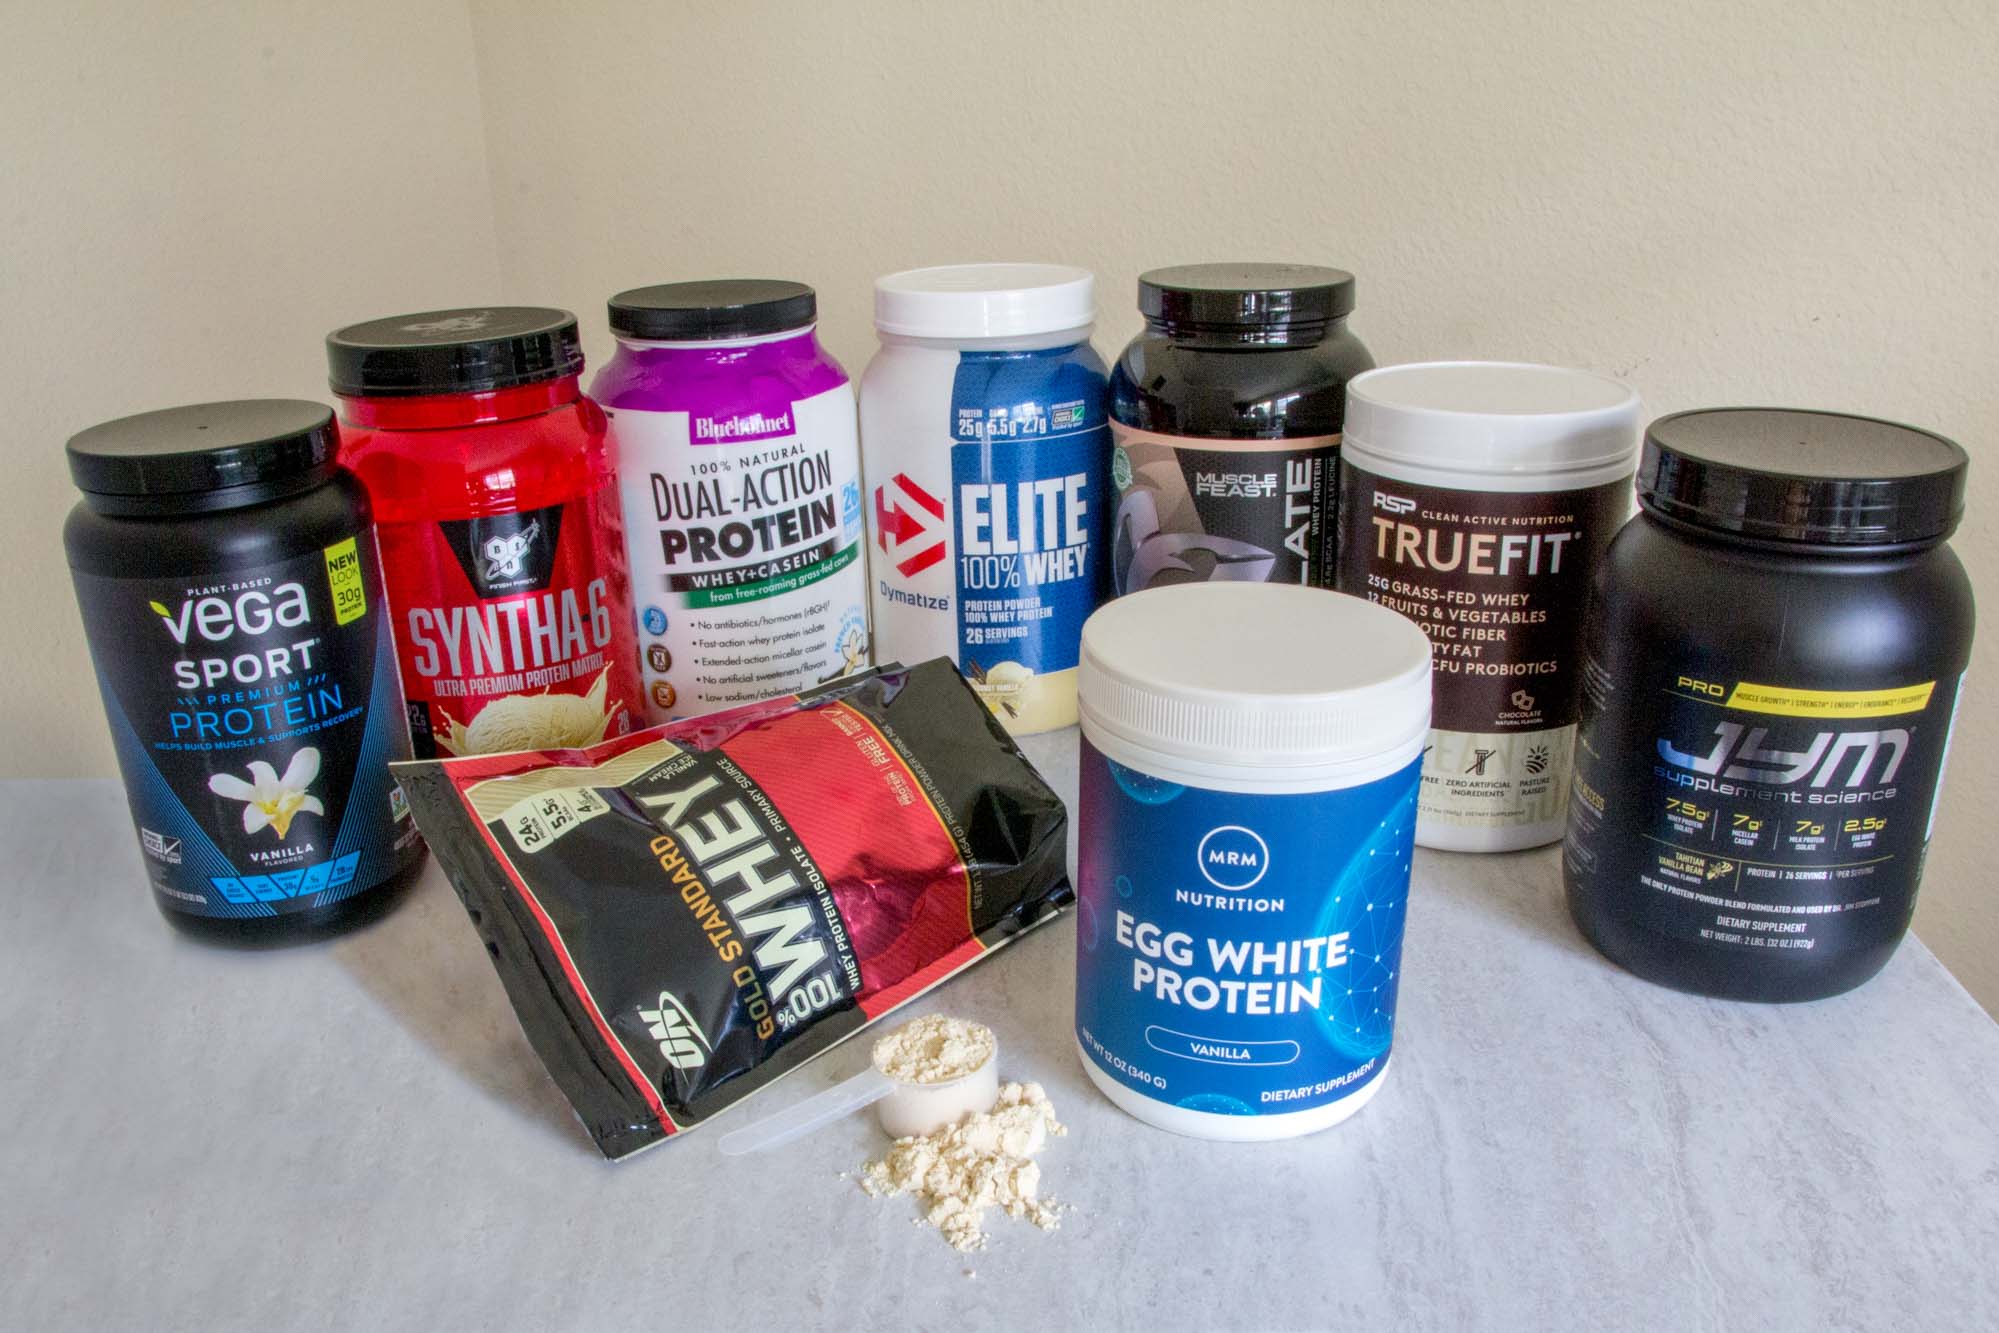 https://www.yourbestdigs.com/wp-content/uploads/2019/12/best-tasting-protein-powder.jpg